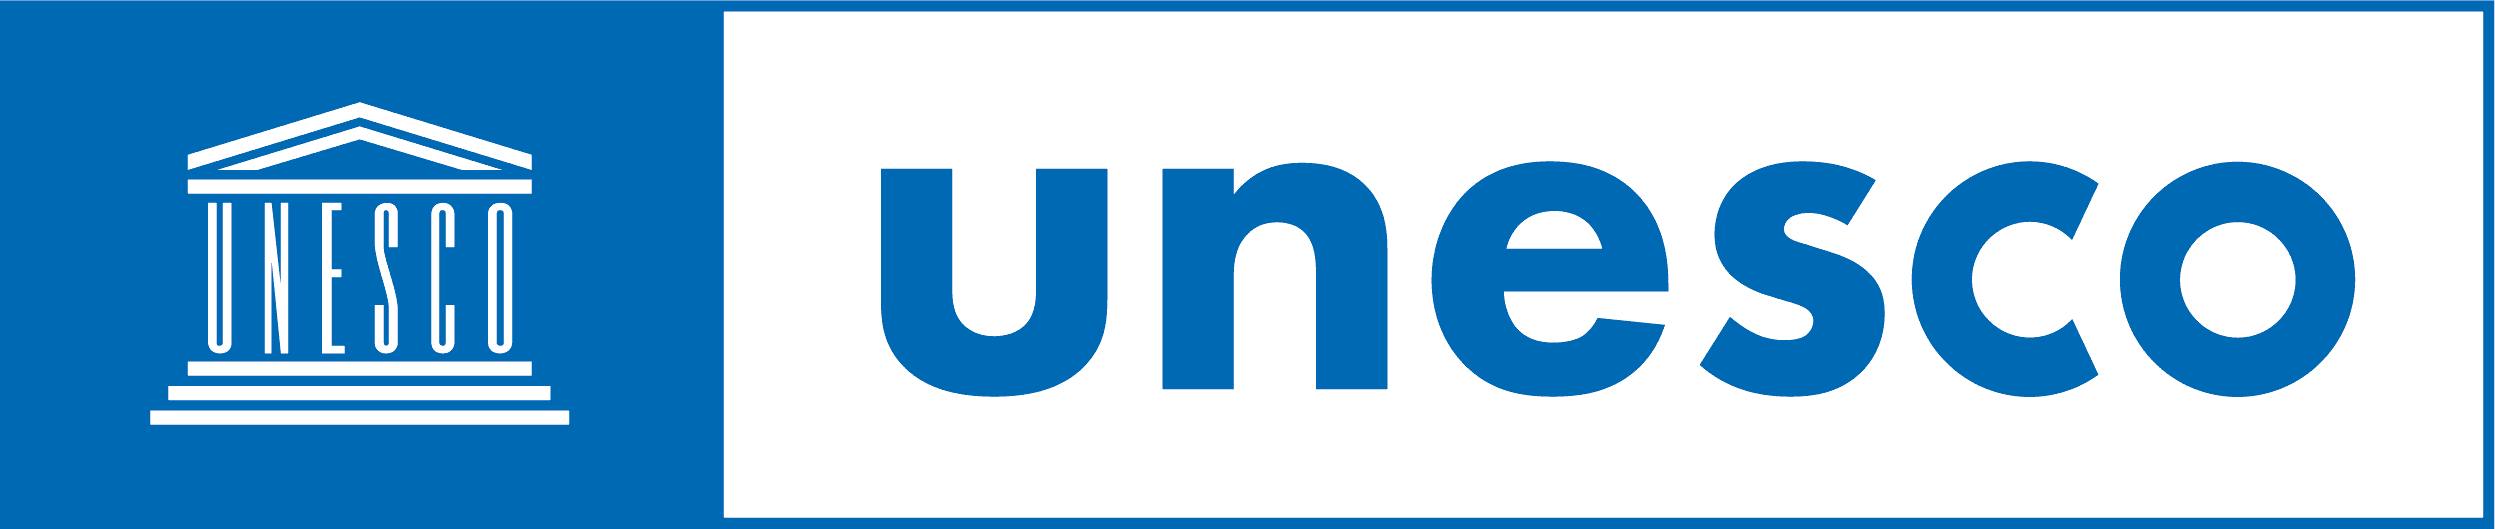 UNESCO_logo_hor_blue.png